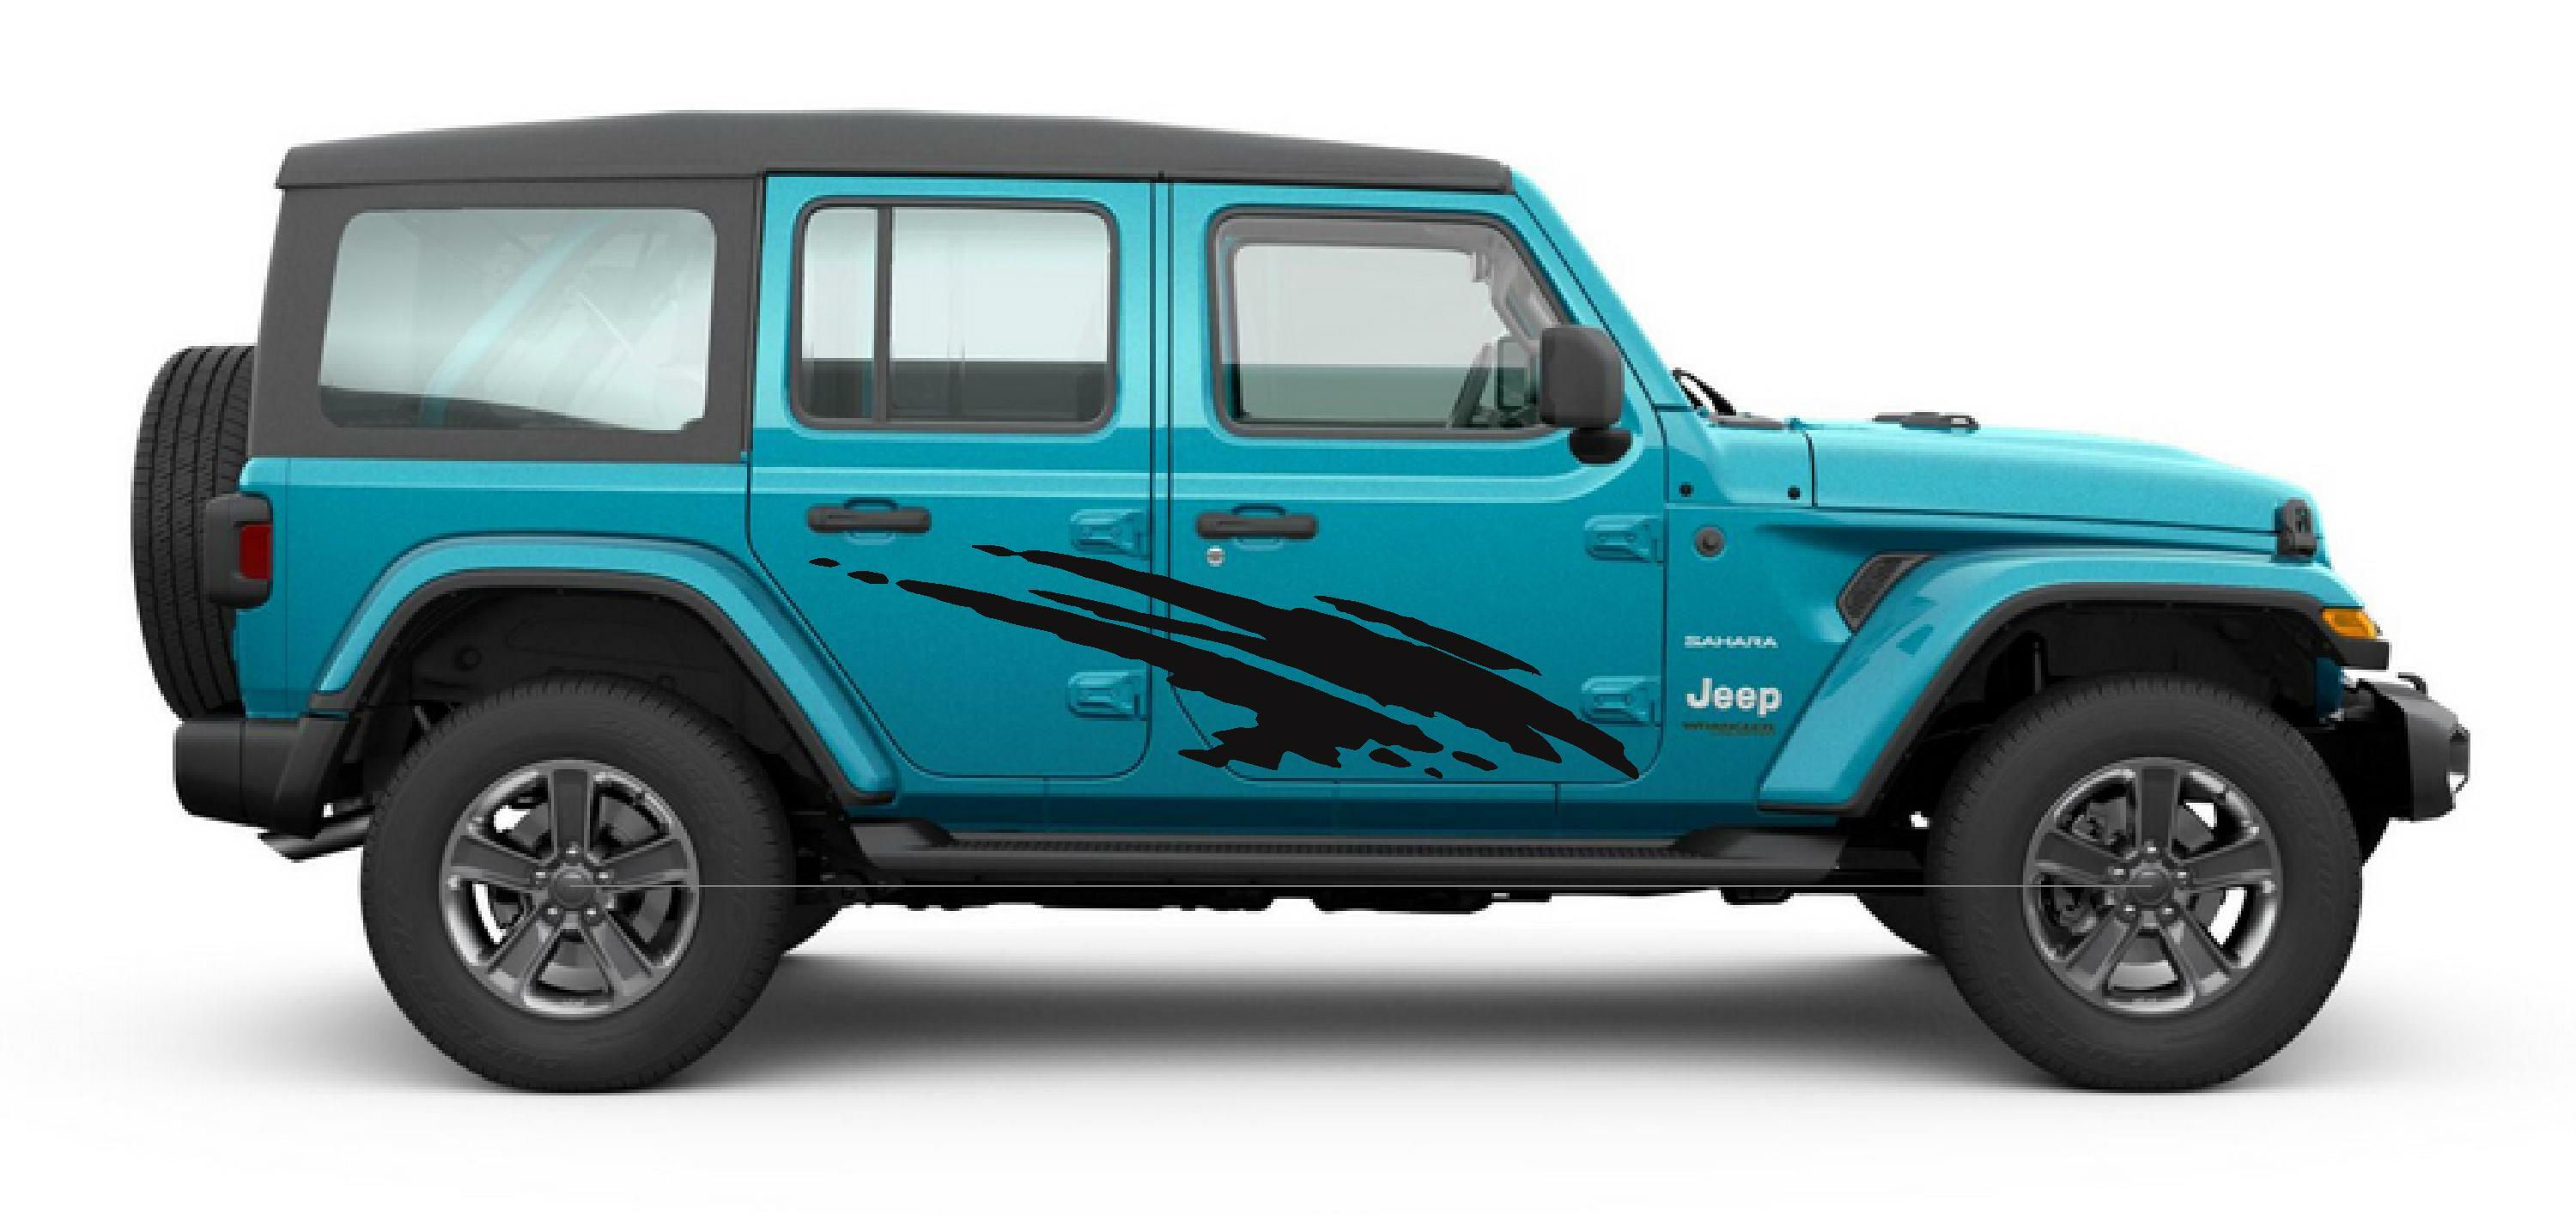 2020 - up Jeep Gladiator Large Side Splash Vinyl Graphics